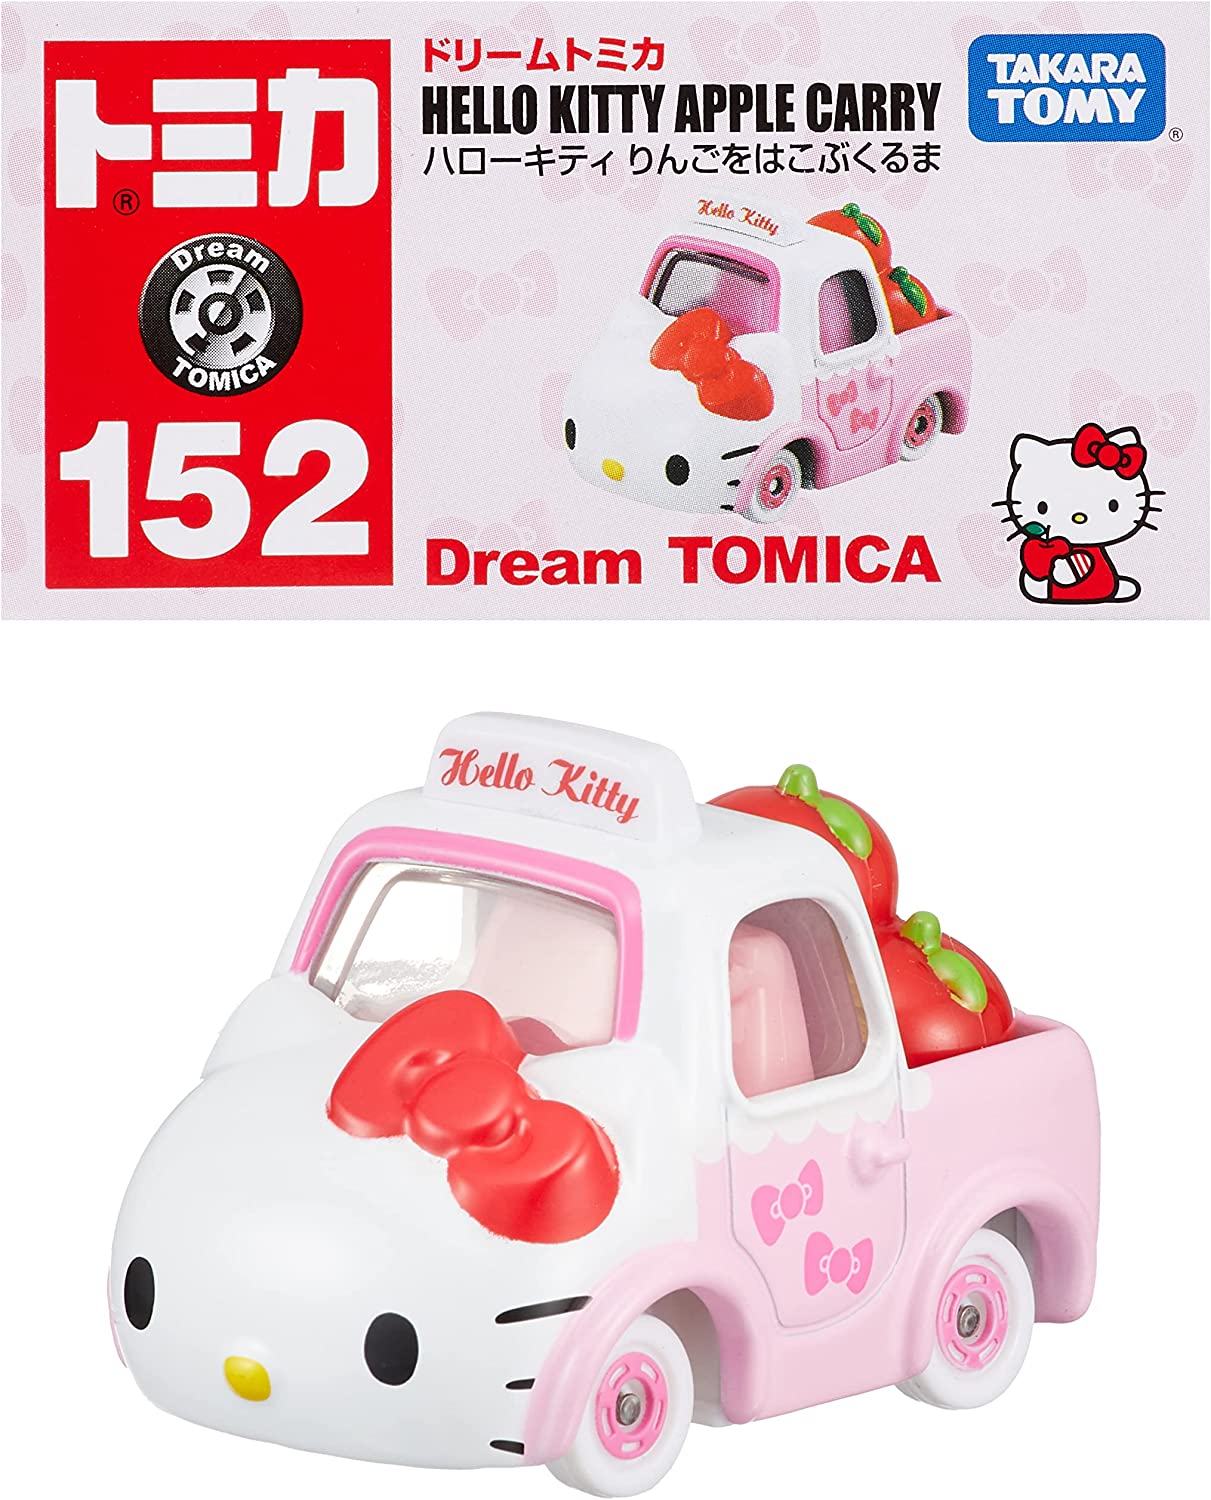 ☆勳寶玩具舖【現貨】TOMY 多美小汽車 DREAM TOMICA #152 凱蒂貓 HELLO KITTY 蘋果貨車